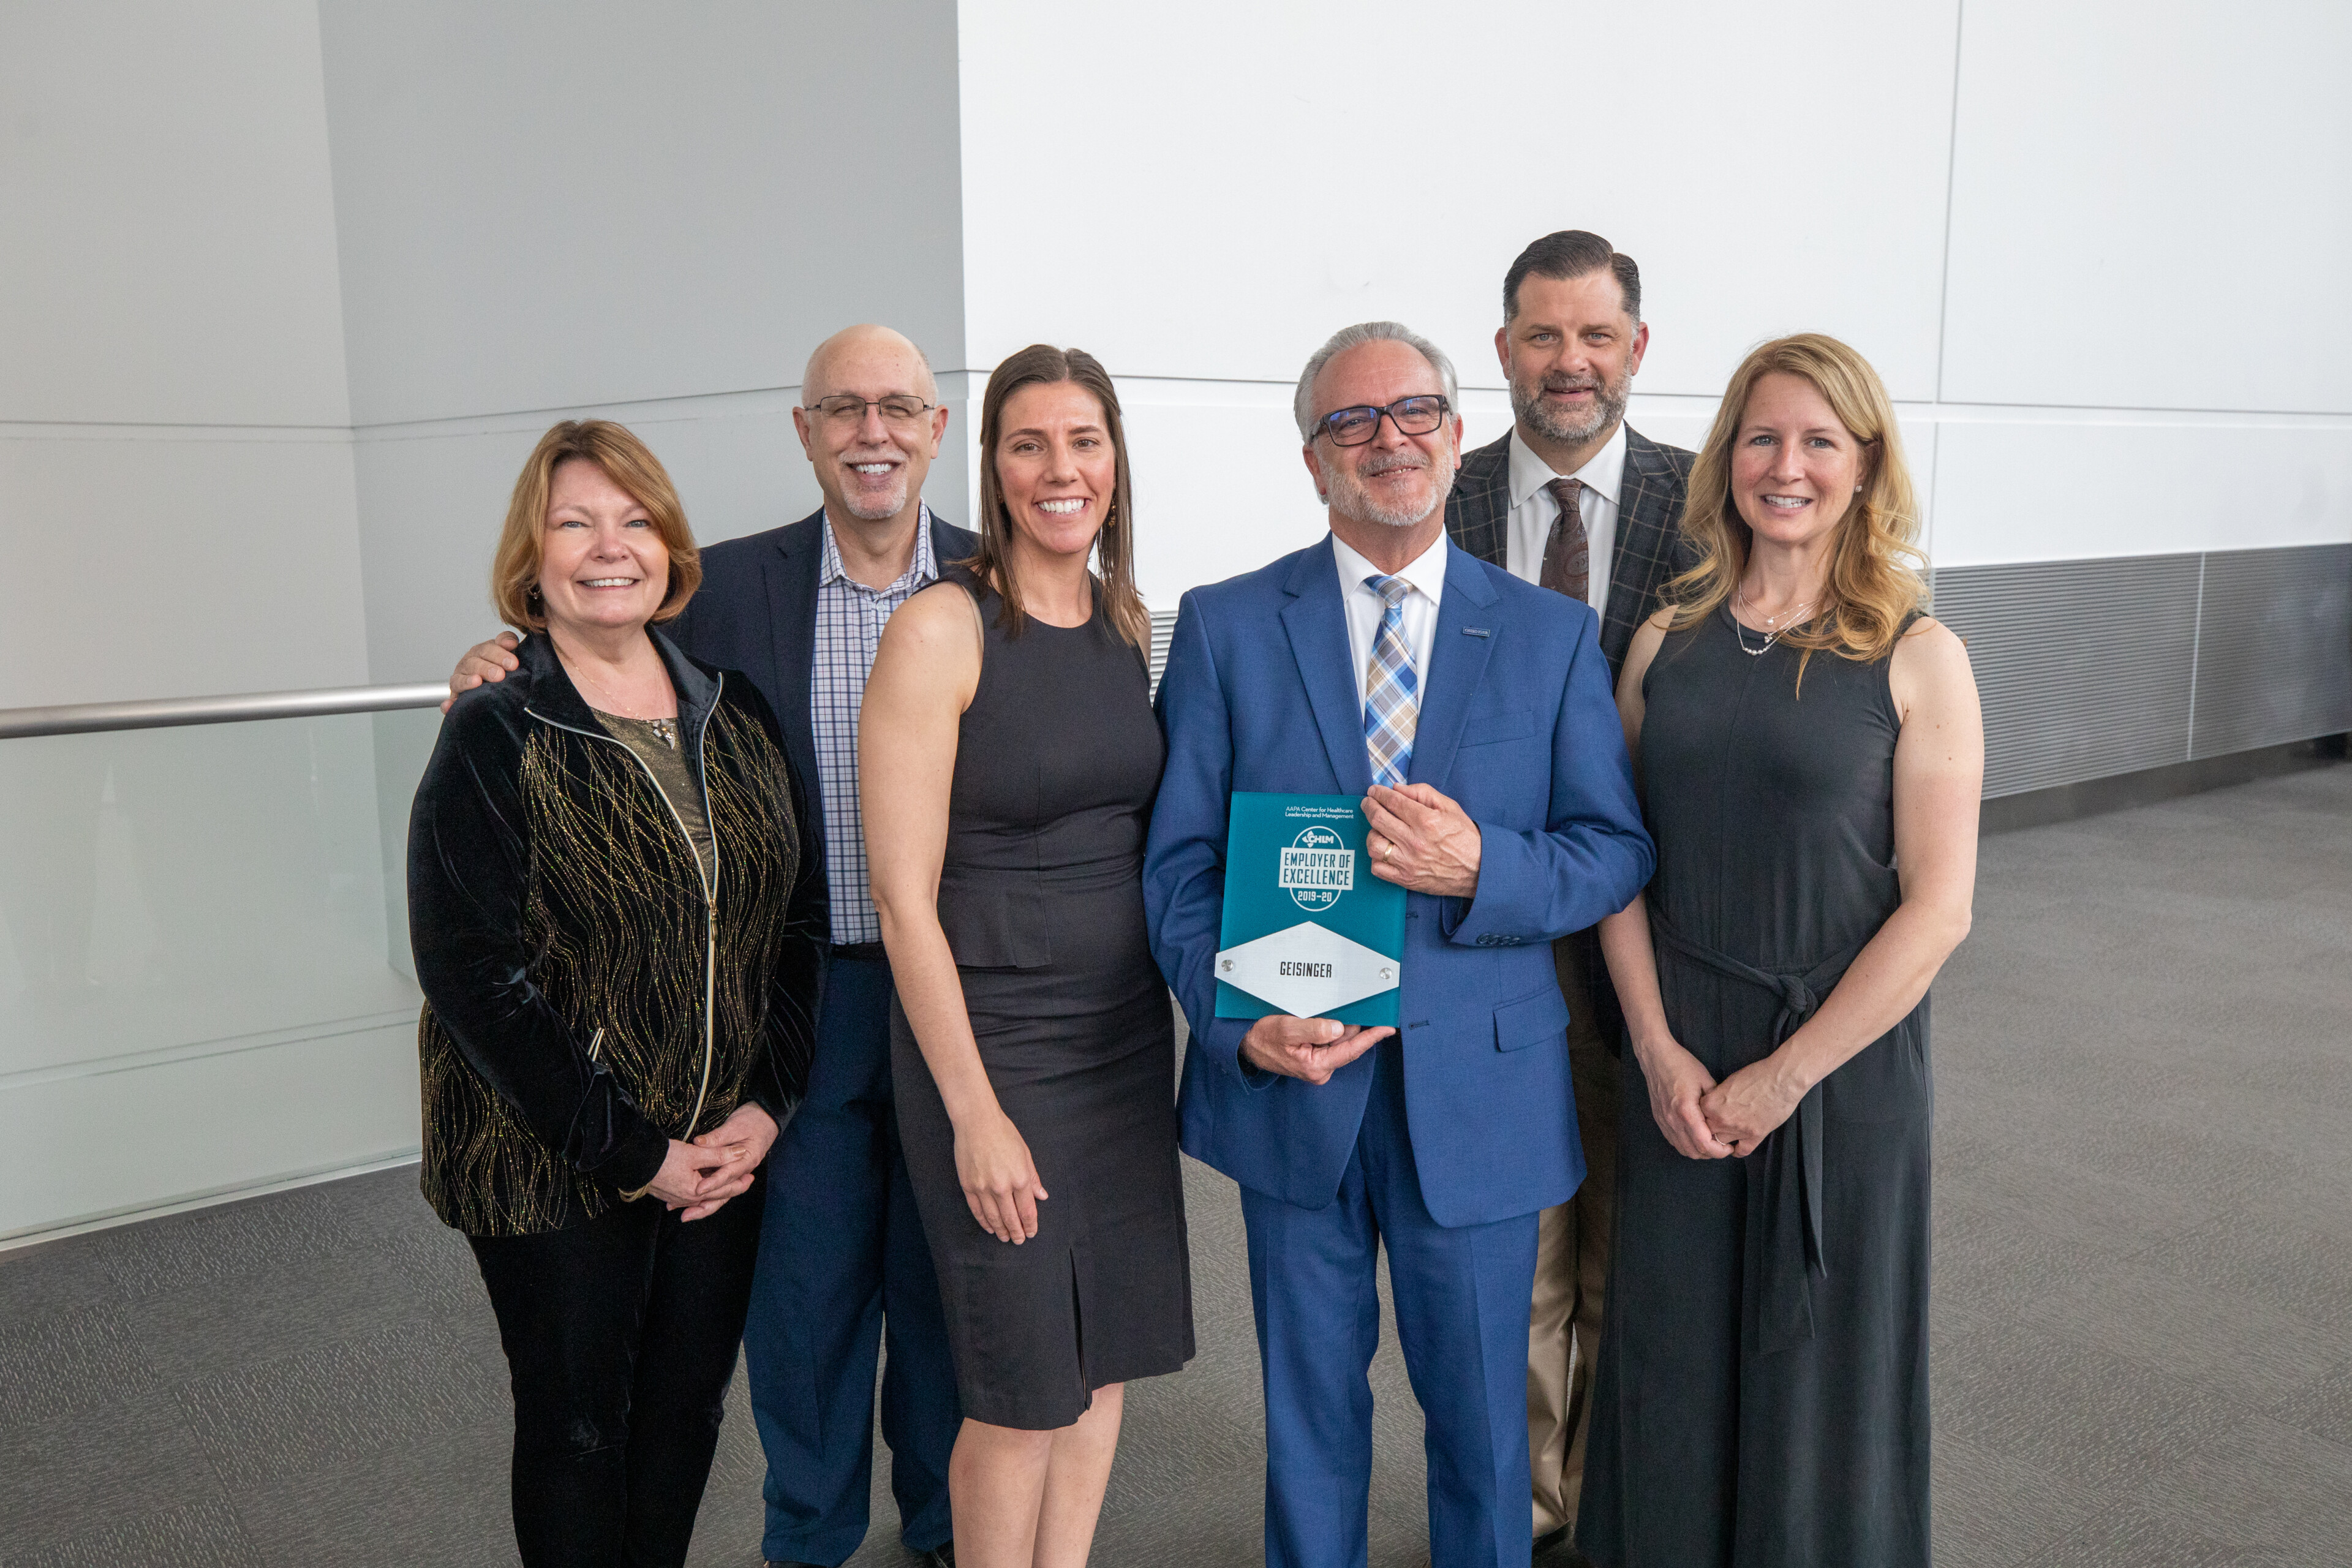 Geisinger representatives accepting an Employer of Excellence award at AAPA 2019